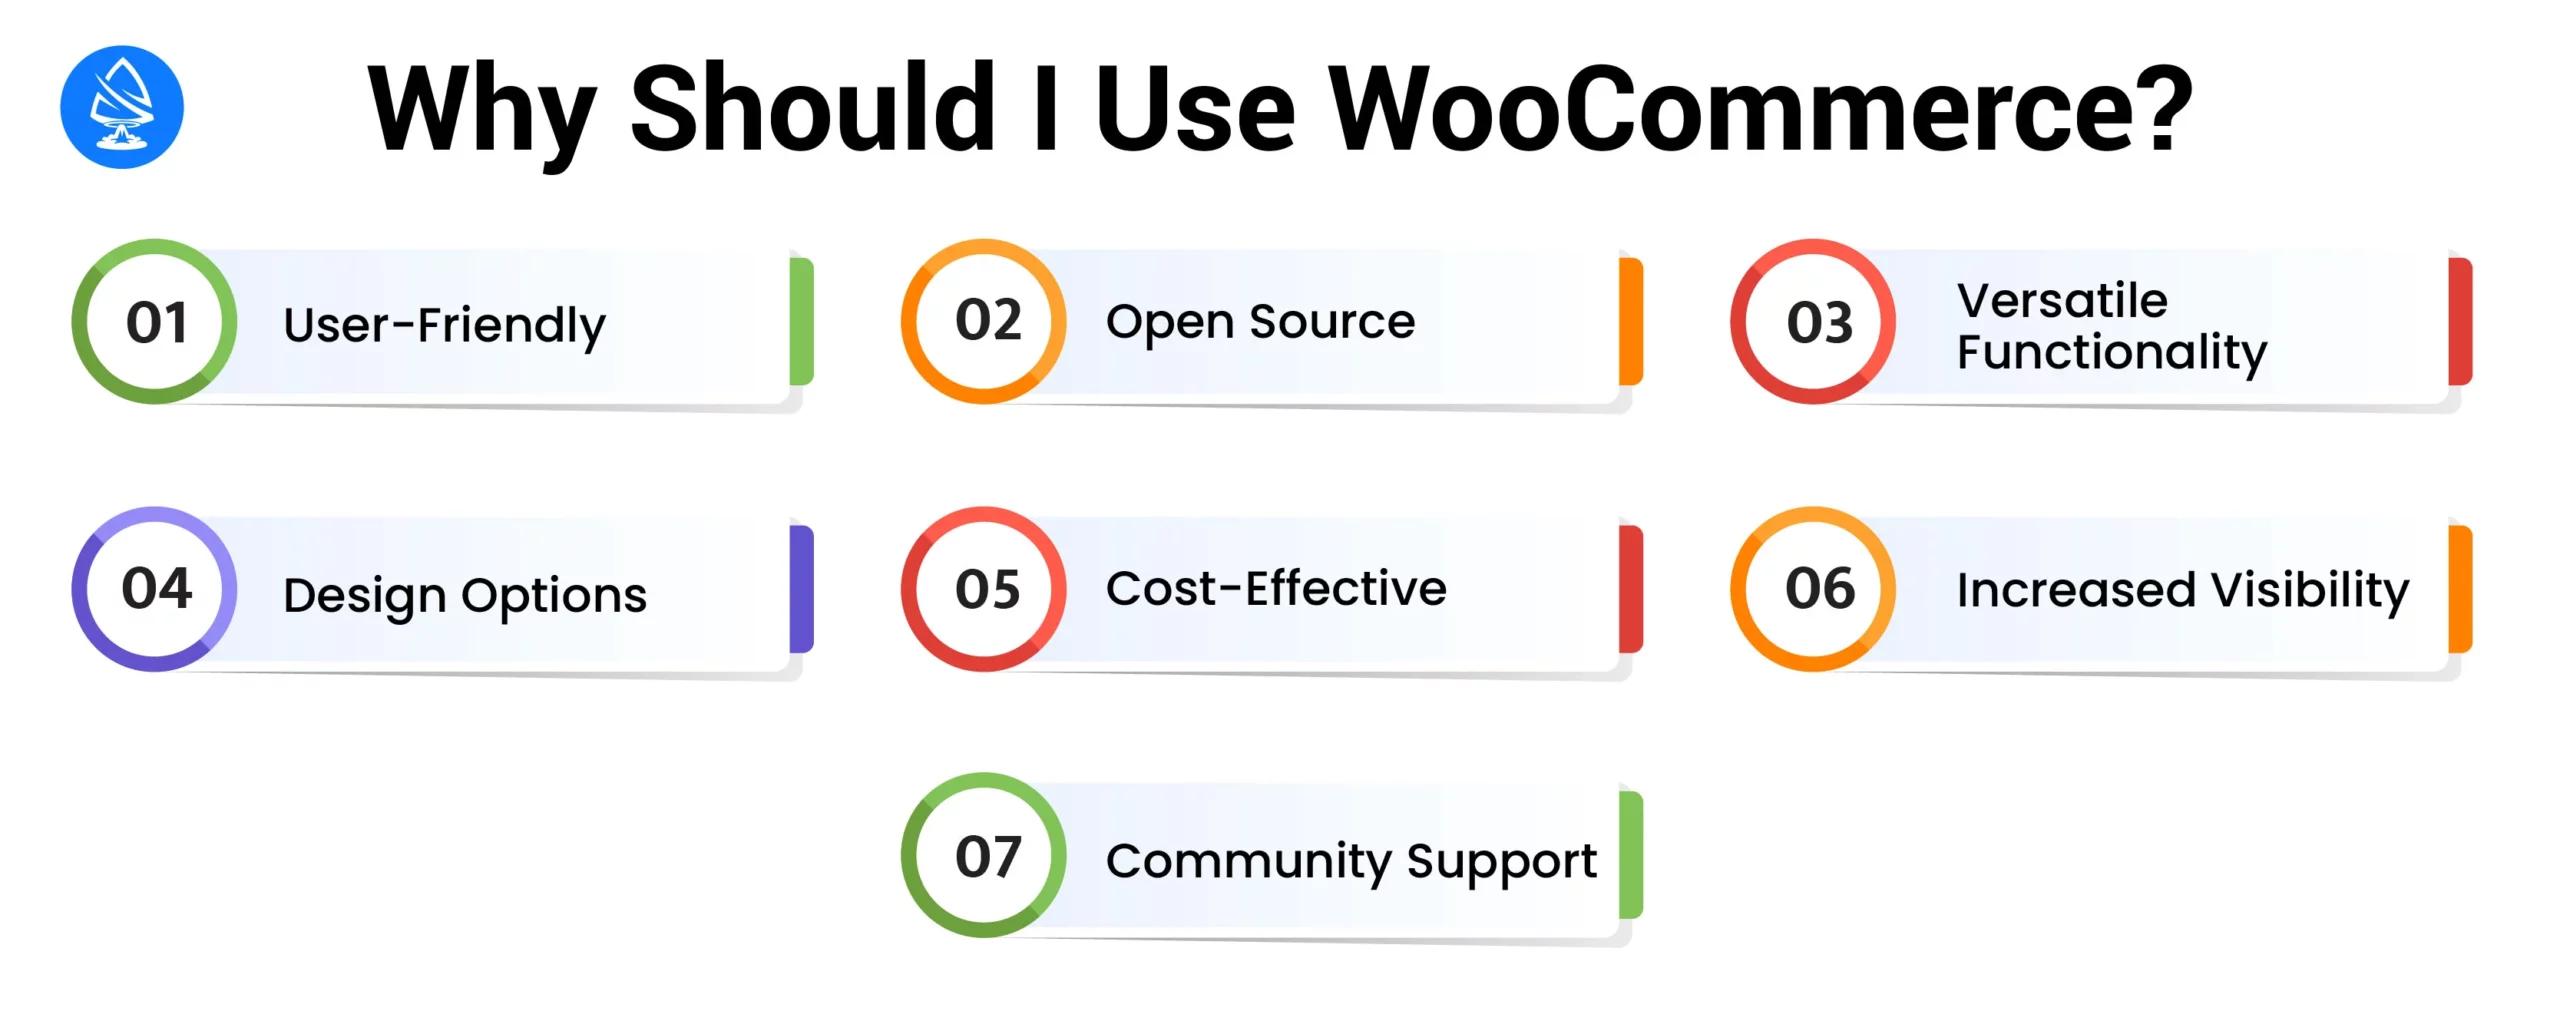 Why Should I Use WooCommerce